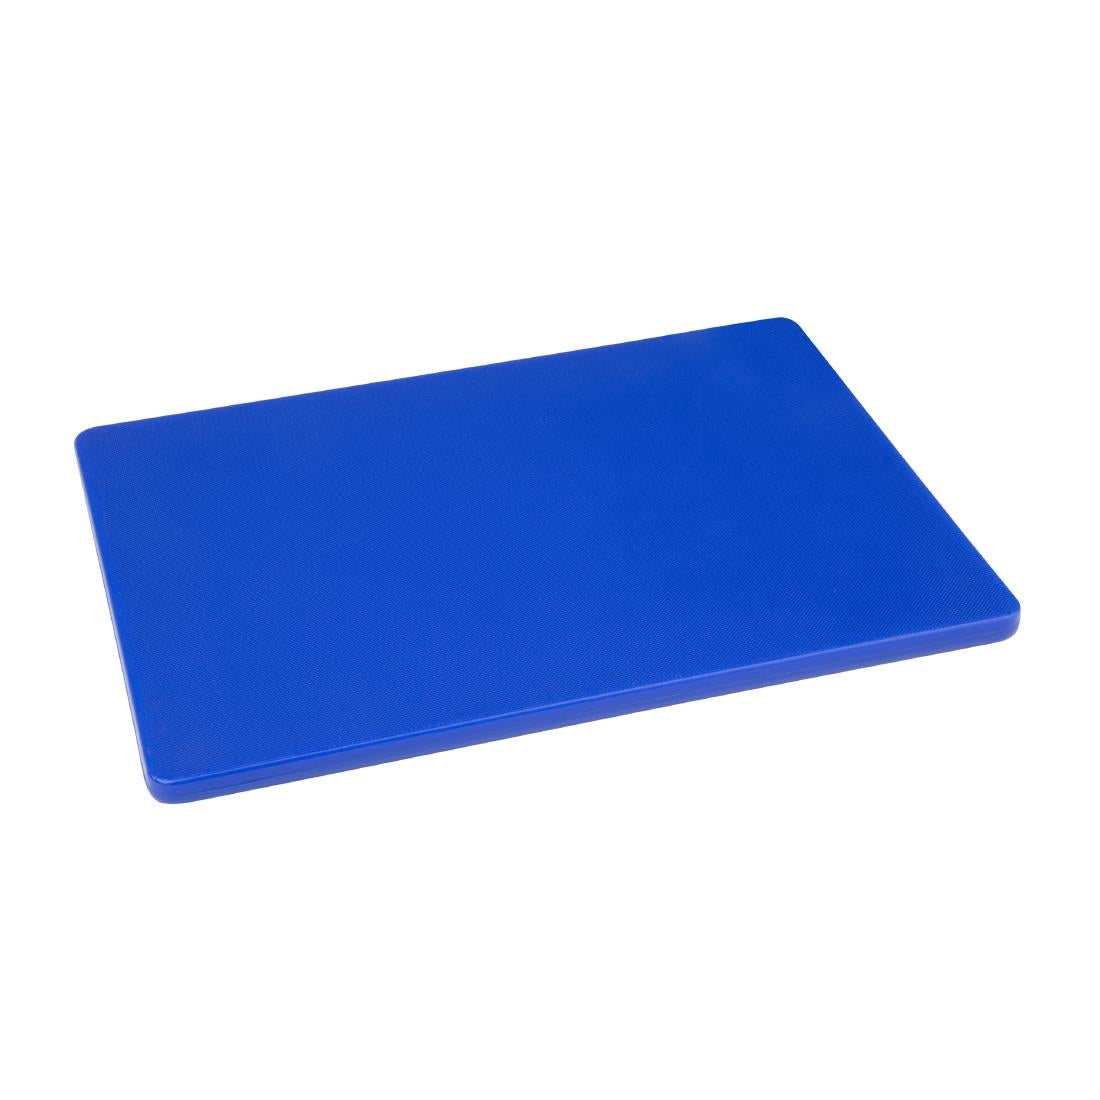 GH791 Hygiplas Low Density Blue Chopping Board Small JD Catering Equipment Solutions Ltd